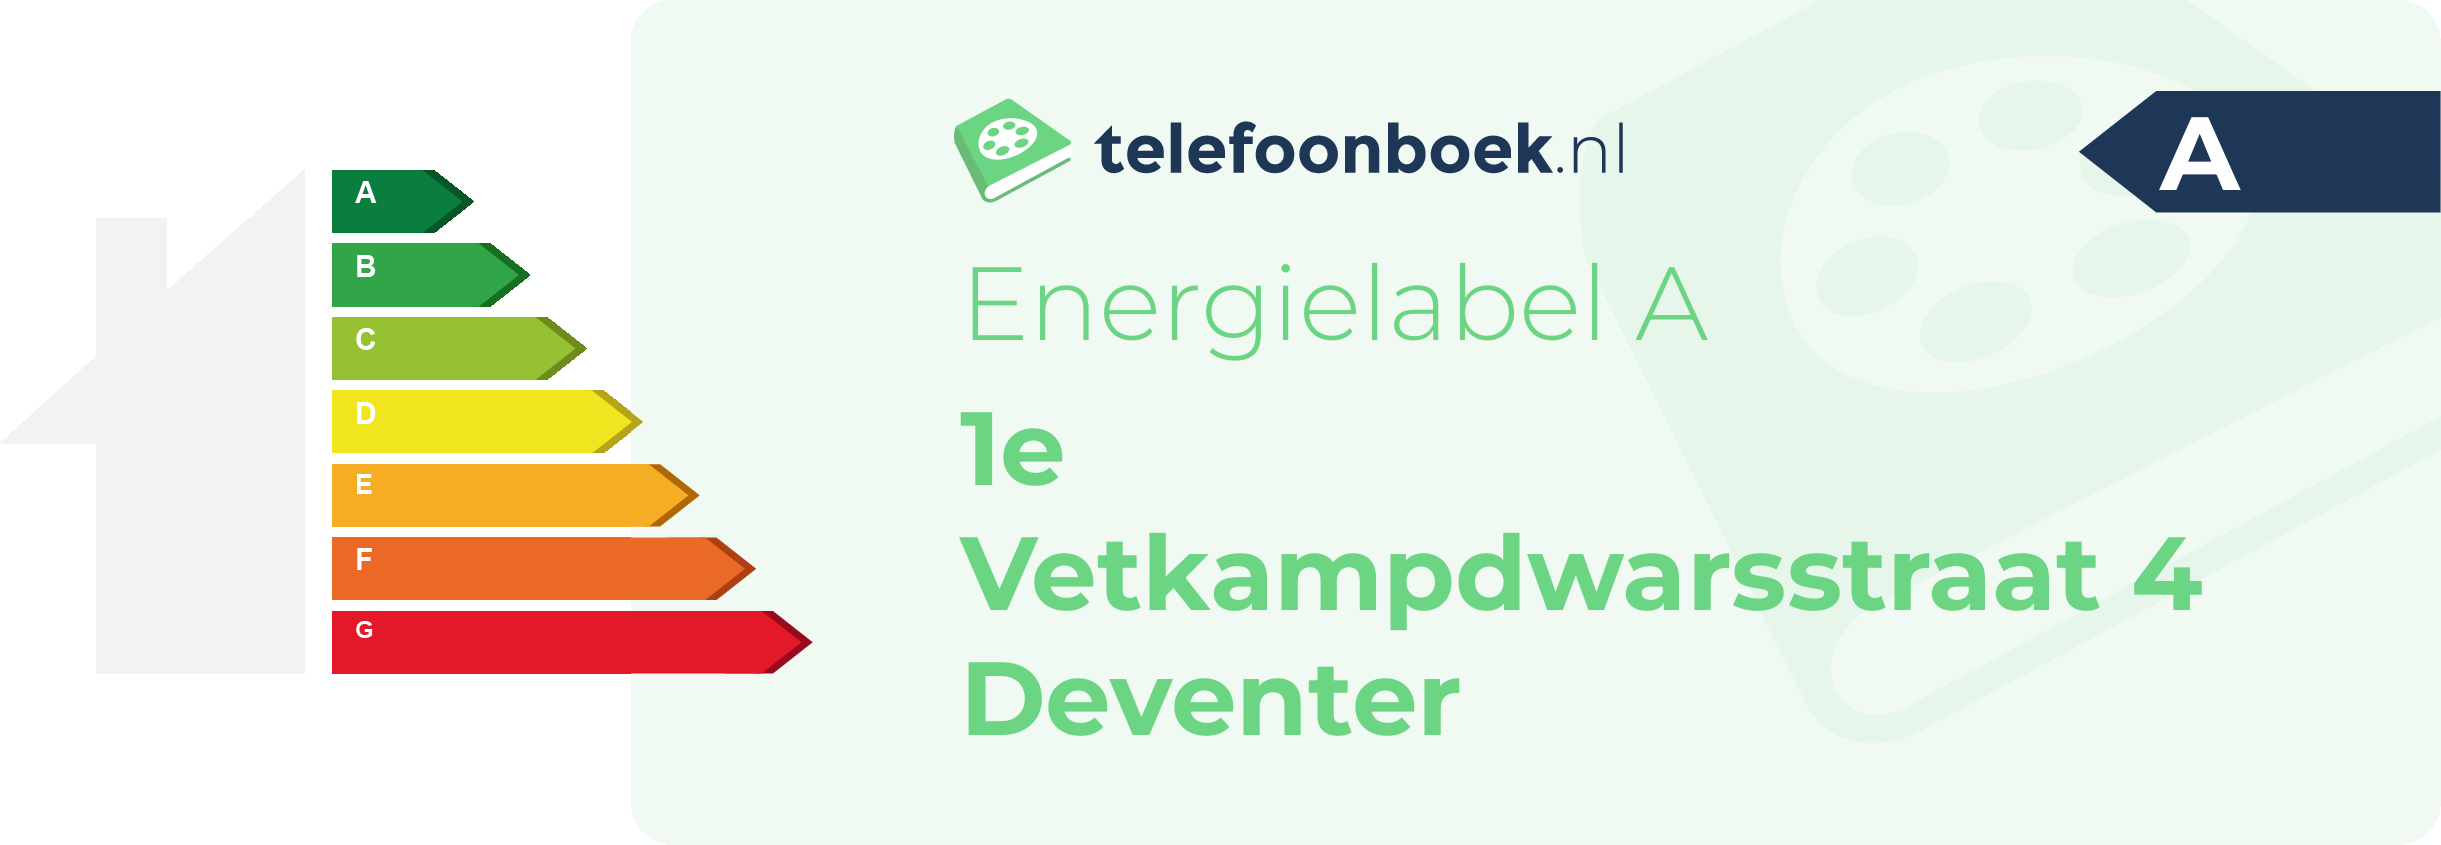 Energielabel 1e Vetkampdwarsstraat 4 Deventer